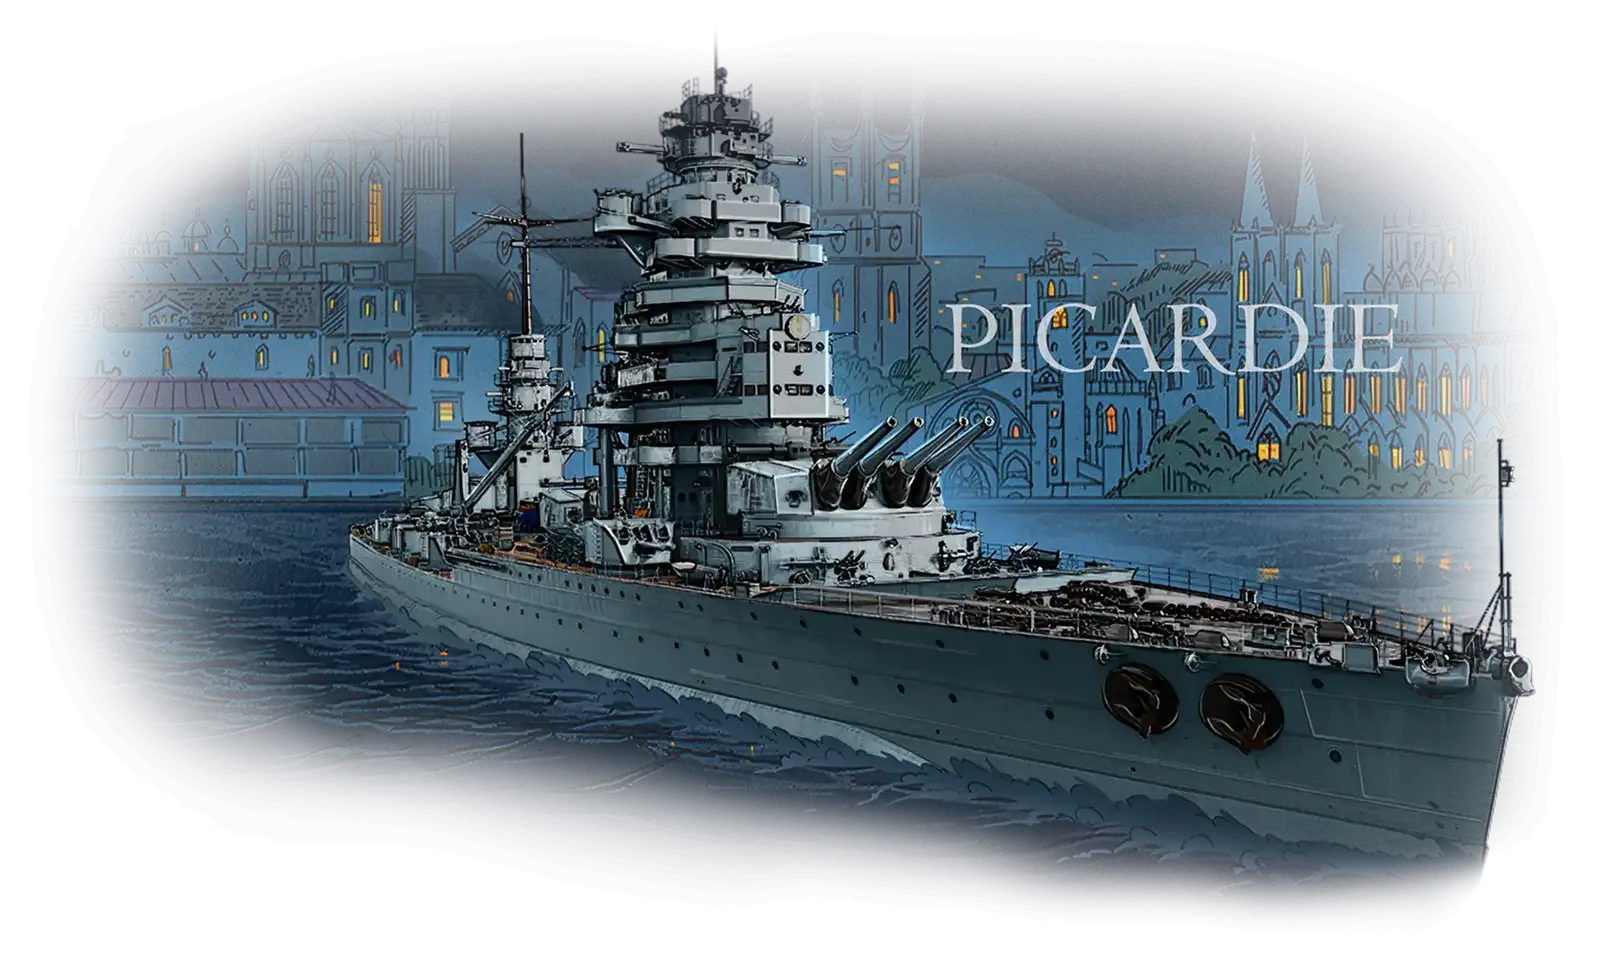 image of ship picardie